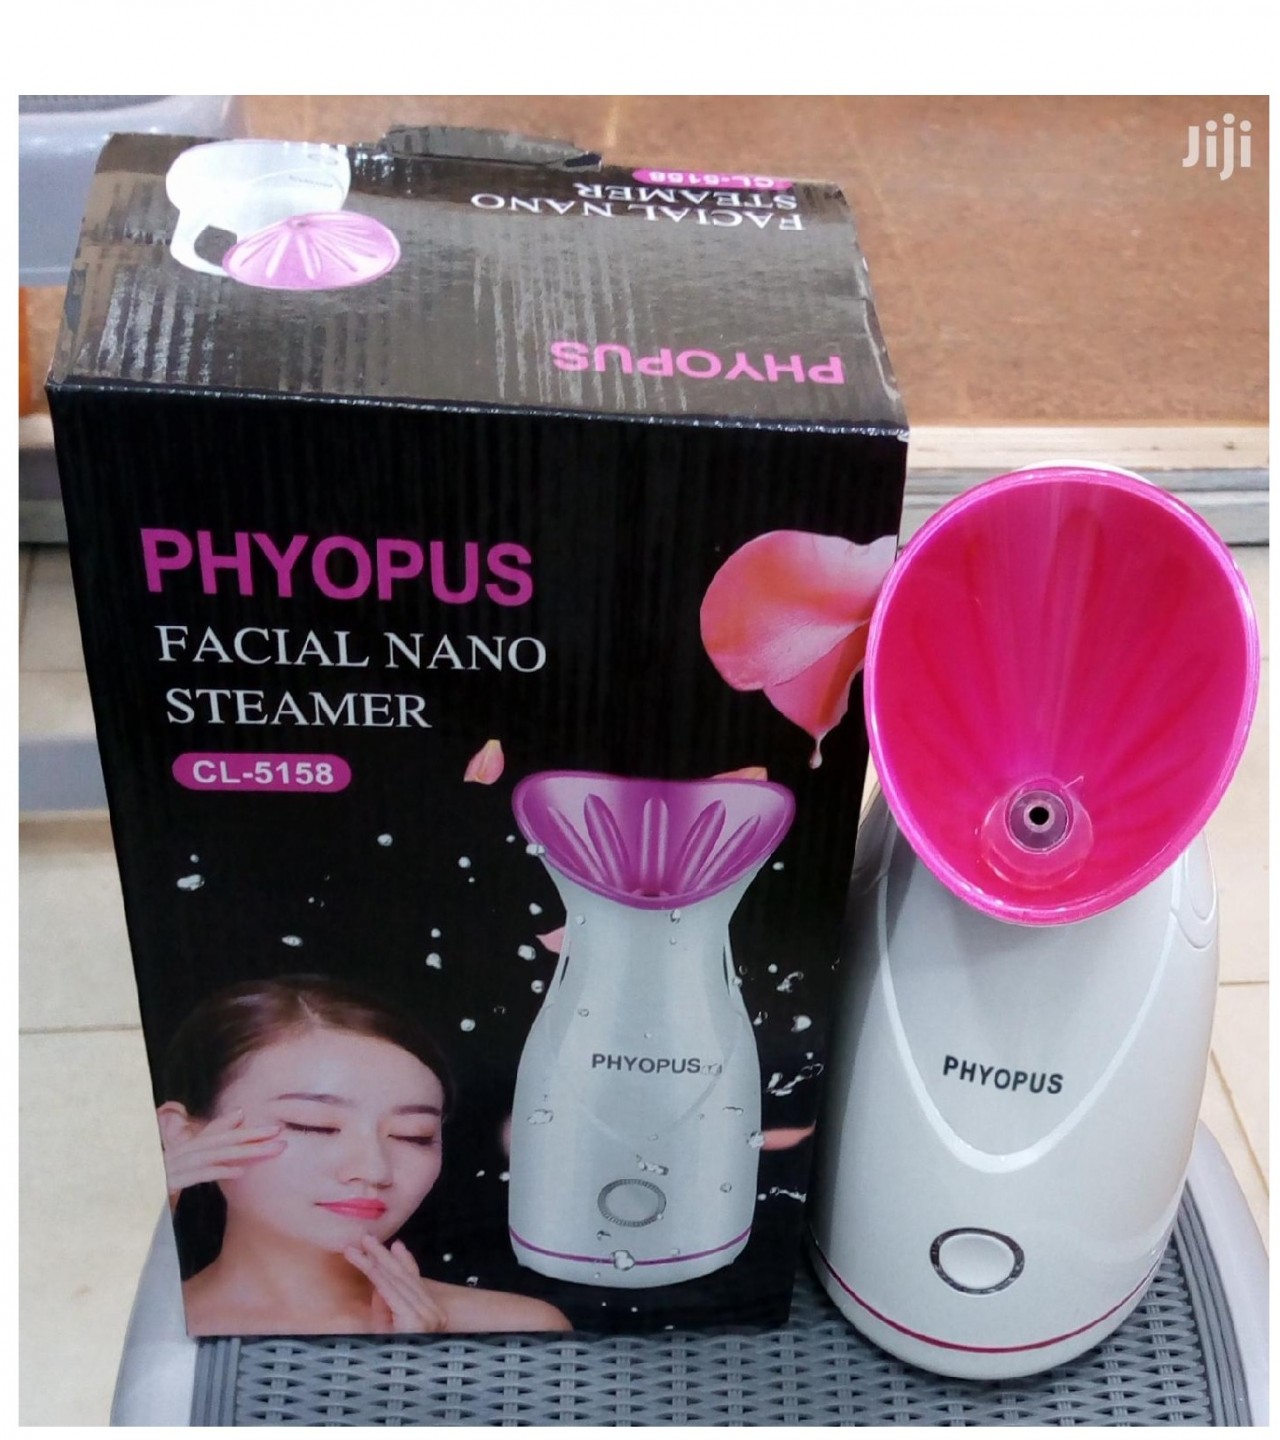 Phyopus Facial Nano Steamer